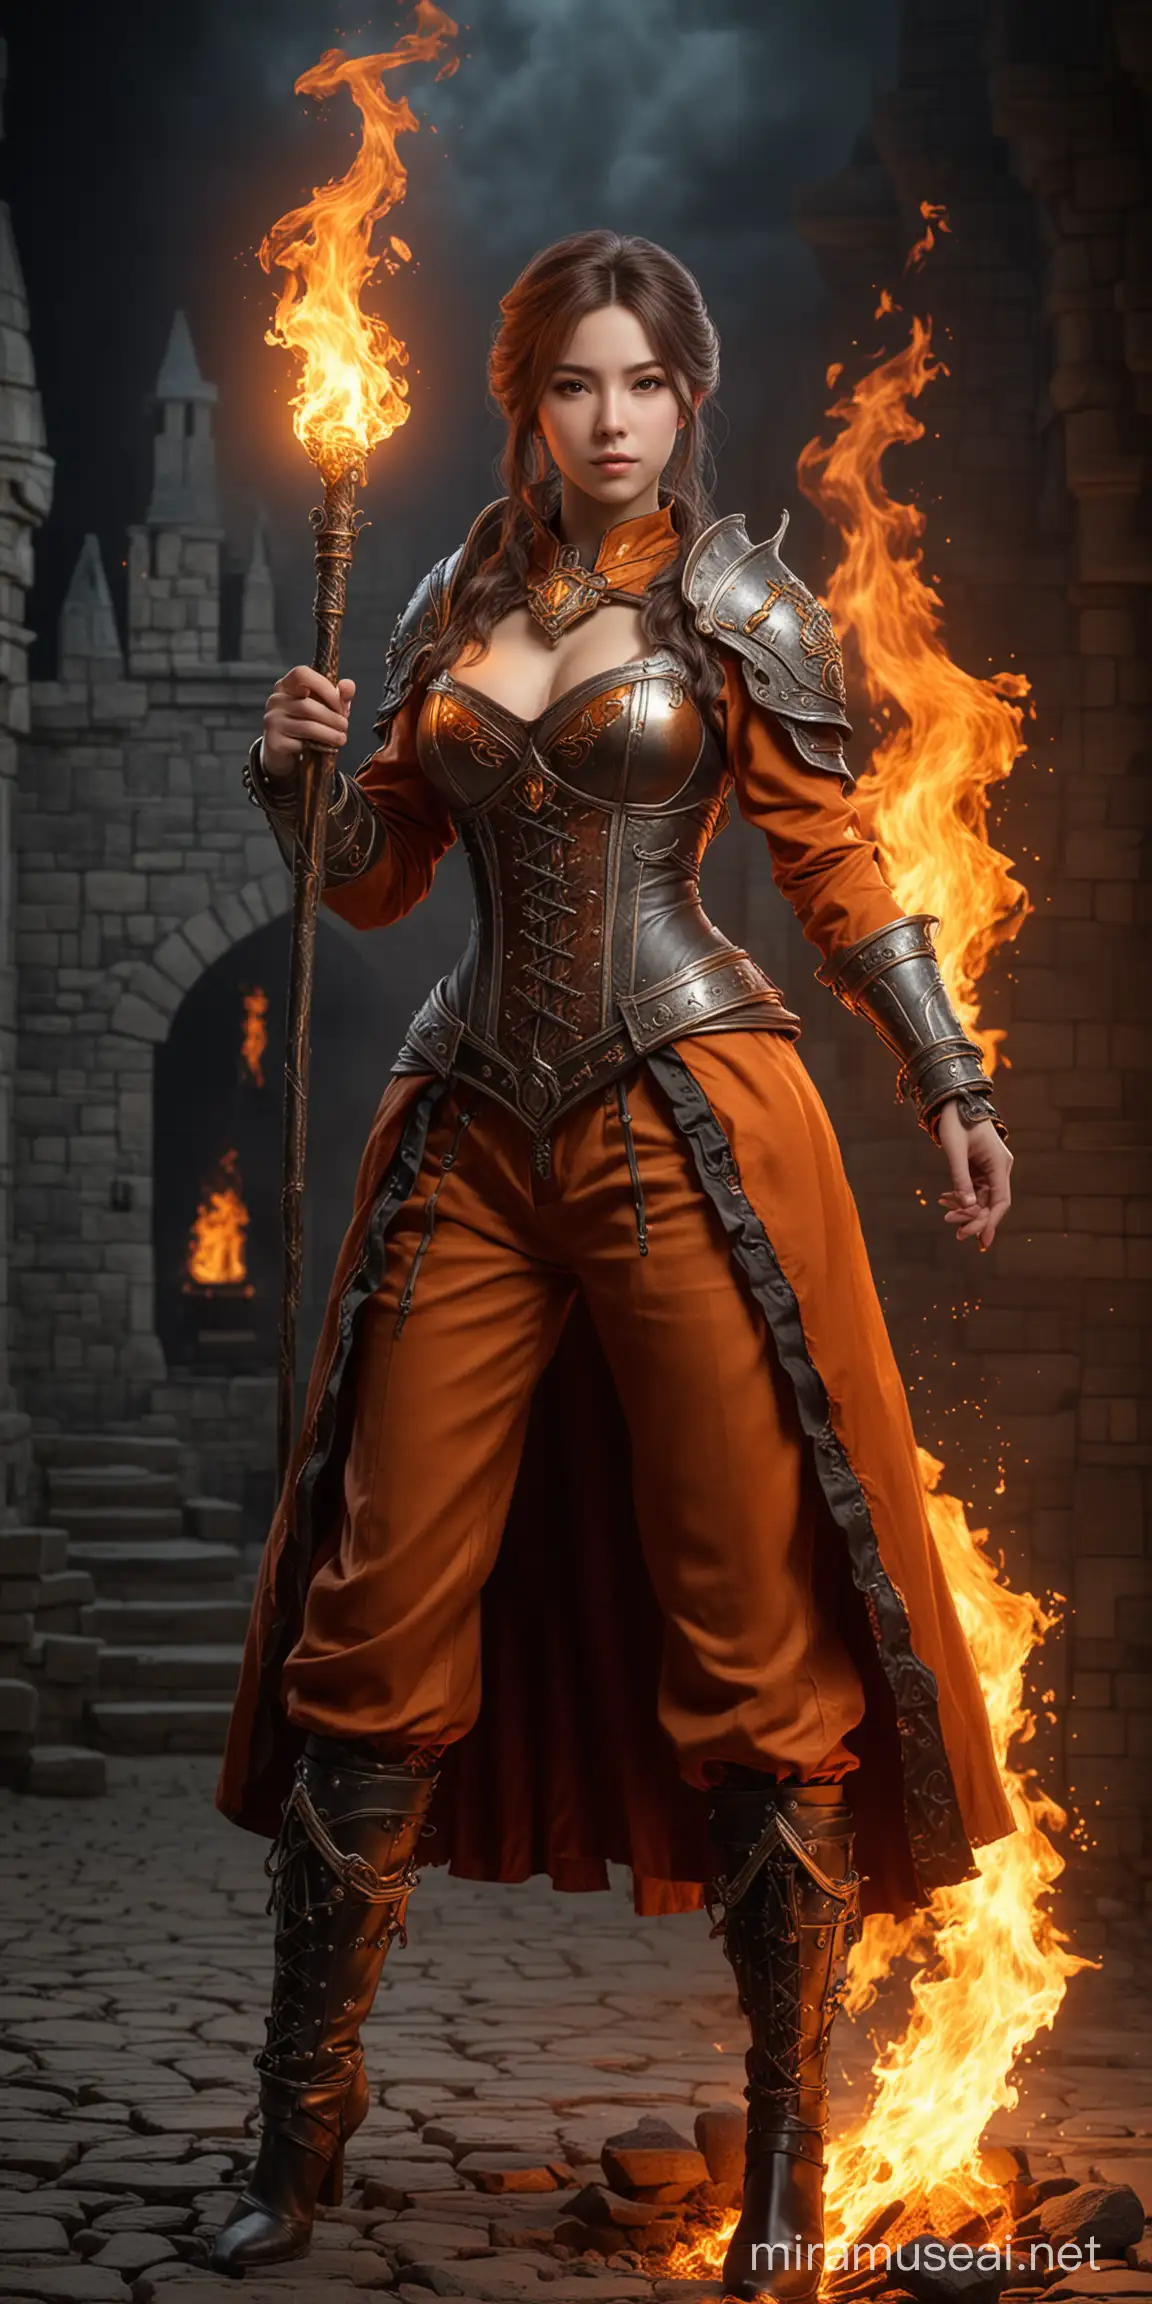 Realistic Beautiful Idol Girl in Fire Element Attire Against Castle Backdrop